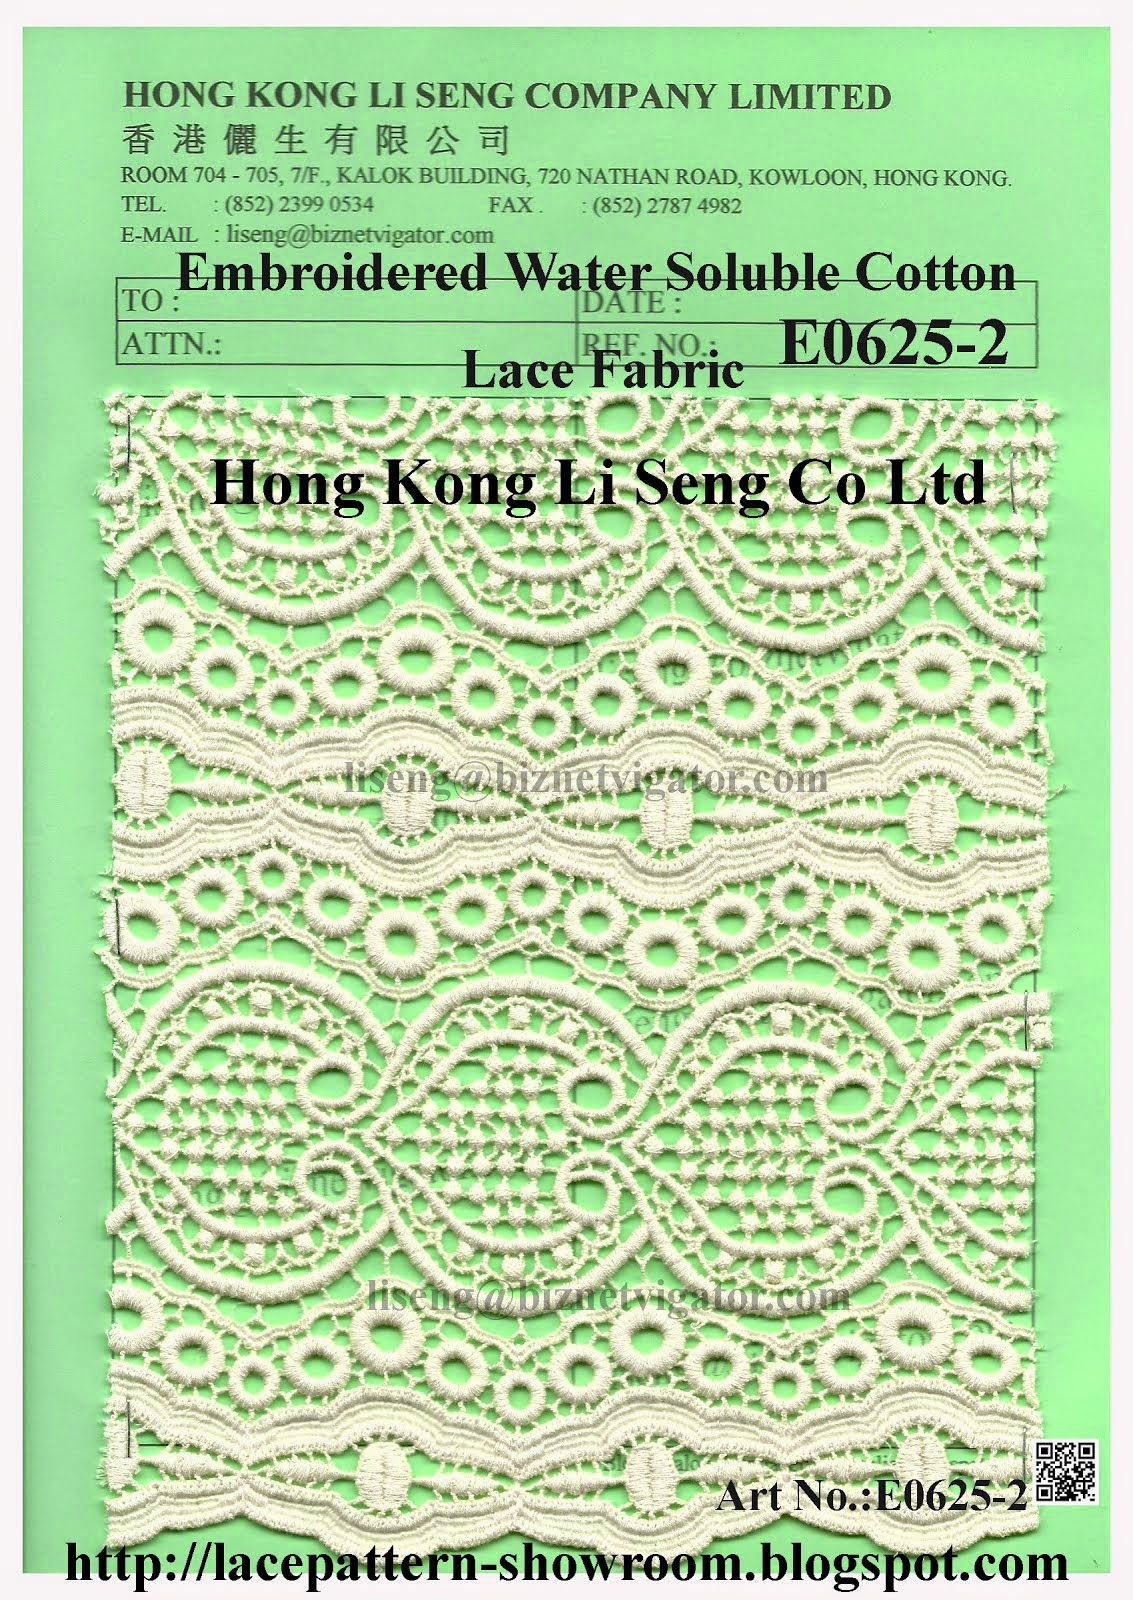 Embroidered Cotton Lace Fabric Manufacturer Wholesaler and Supplier - Hong Kong Li Seng Co Ltd